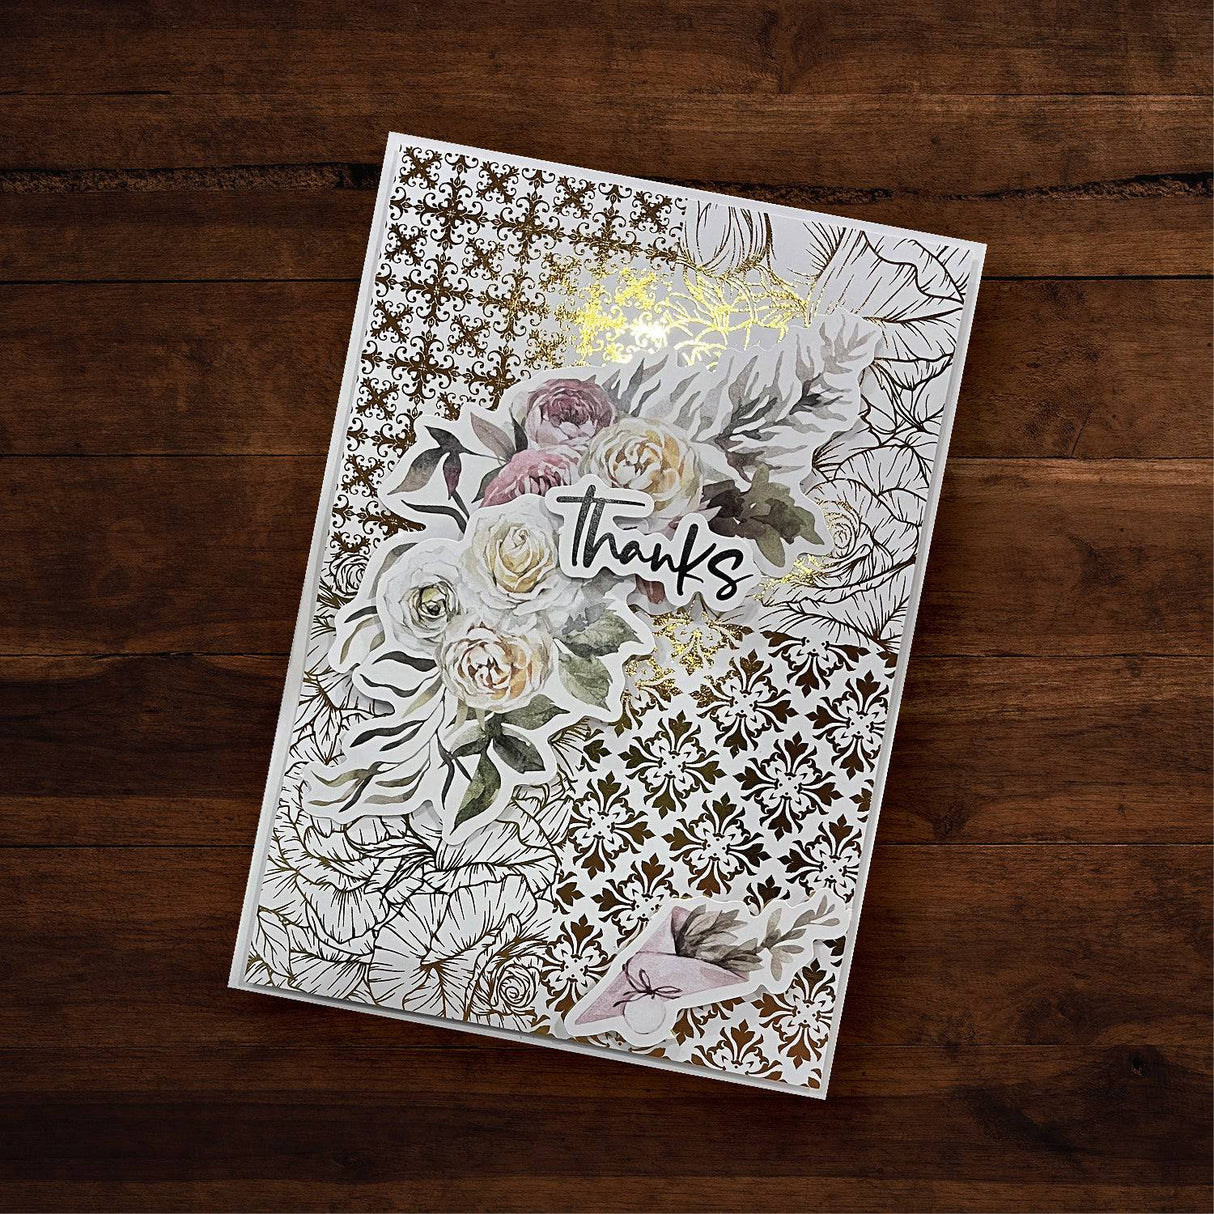 Floral Card Fronts - Gold Foil 6x6 Paper Collection 29266 - Paper Rose Studio